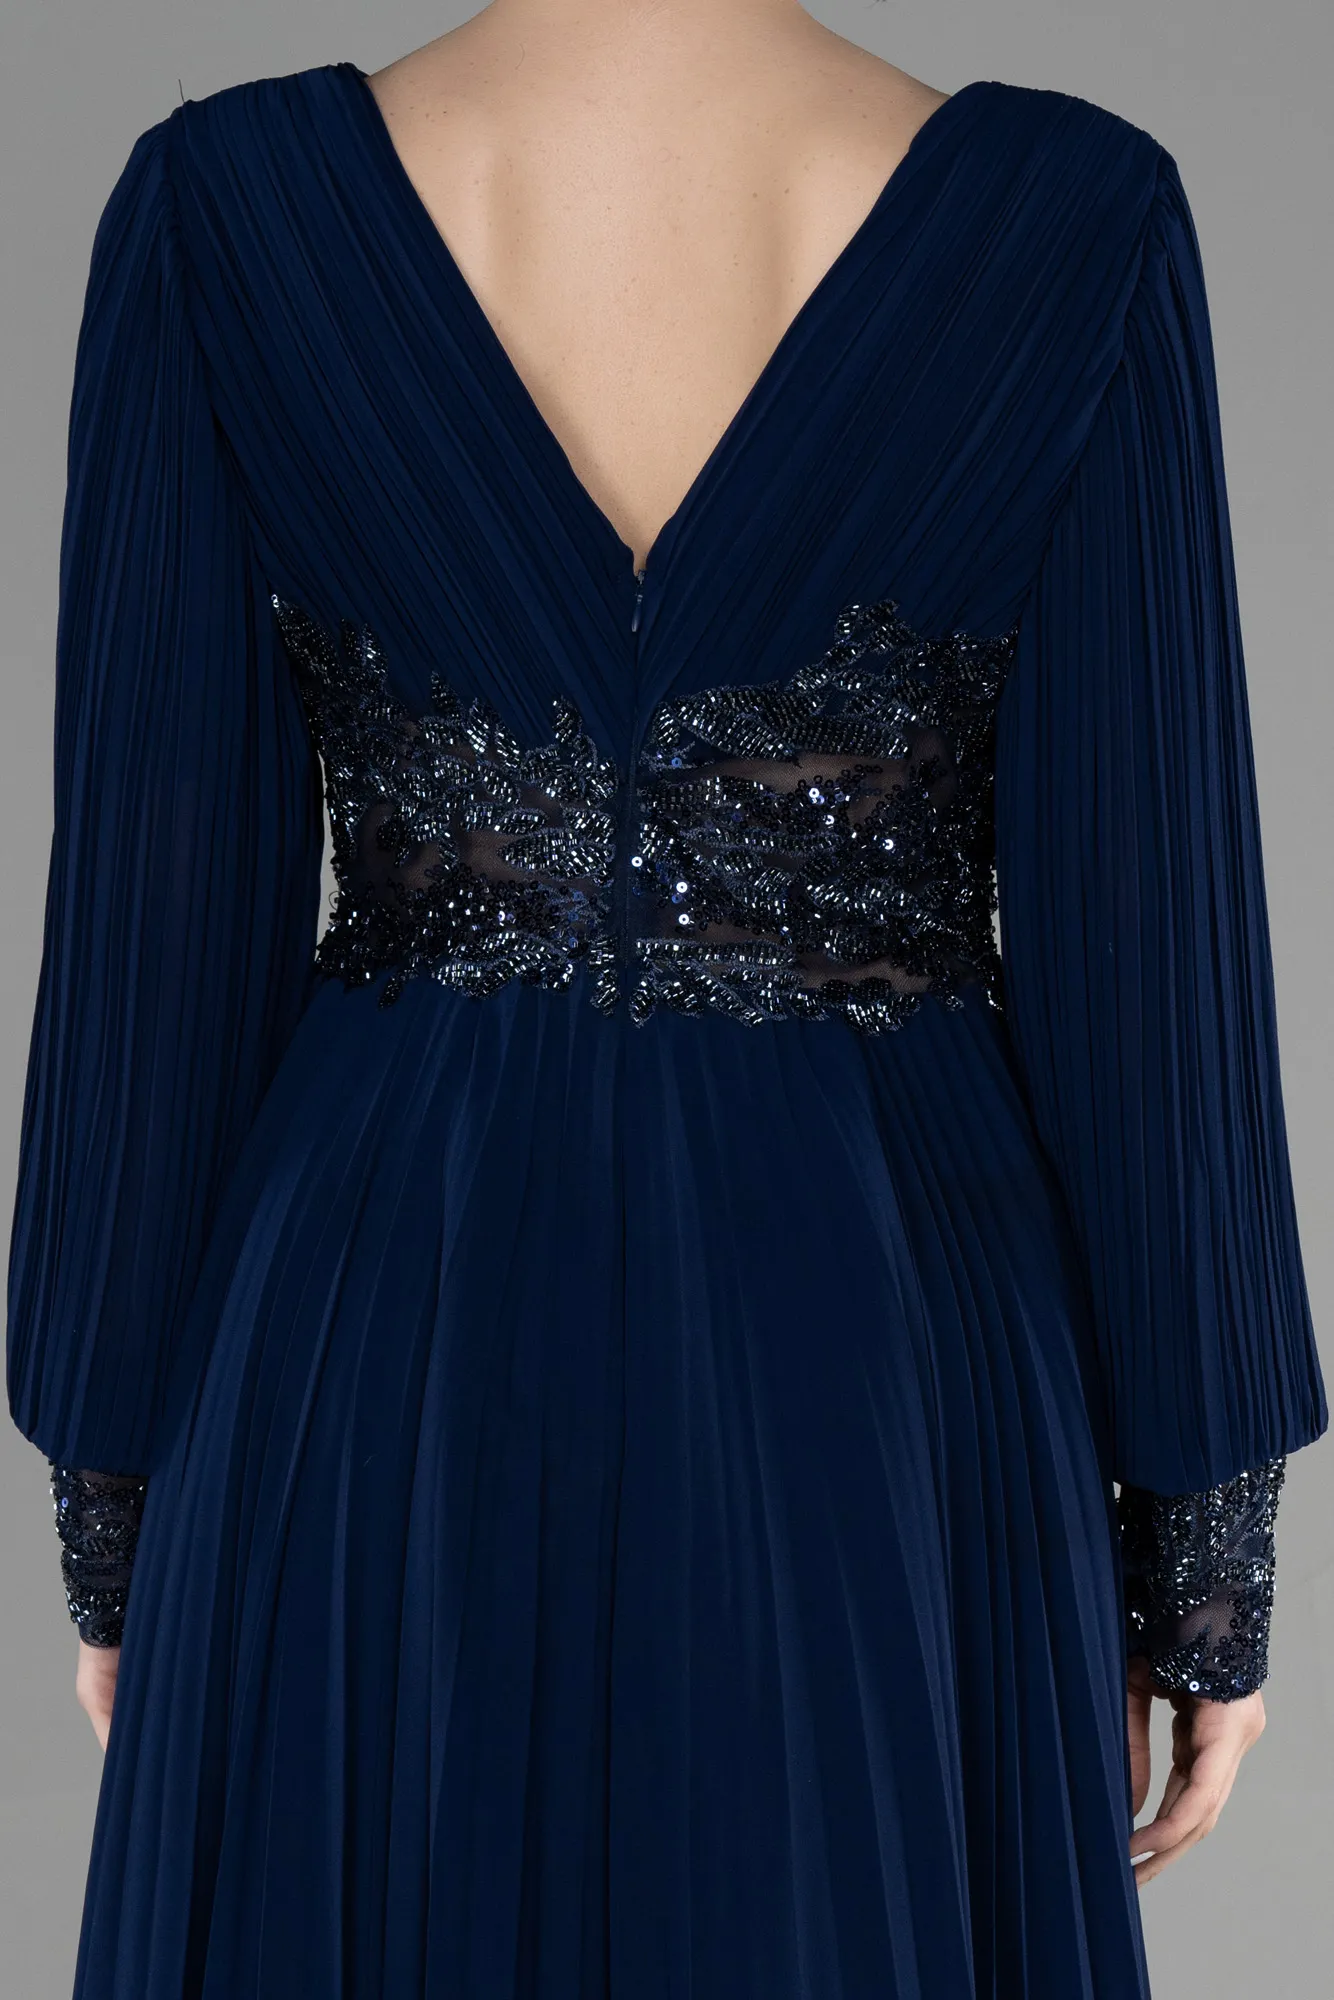 Navy Blue-Long Chiffon Evening Dress ABU2183